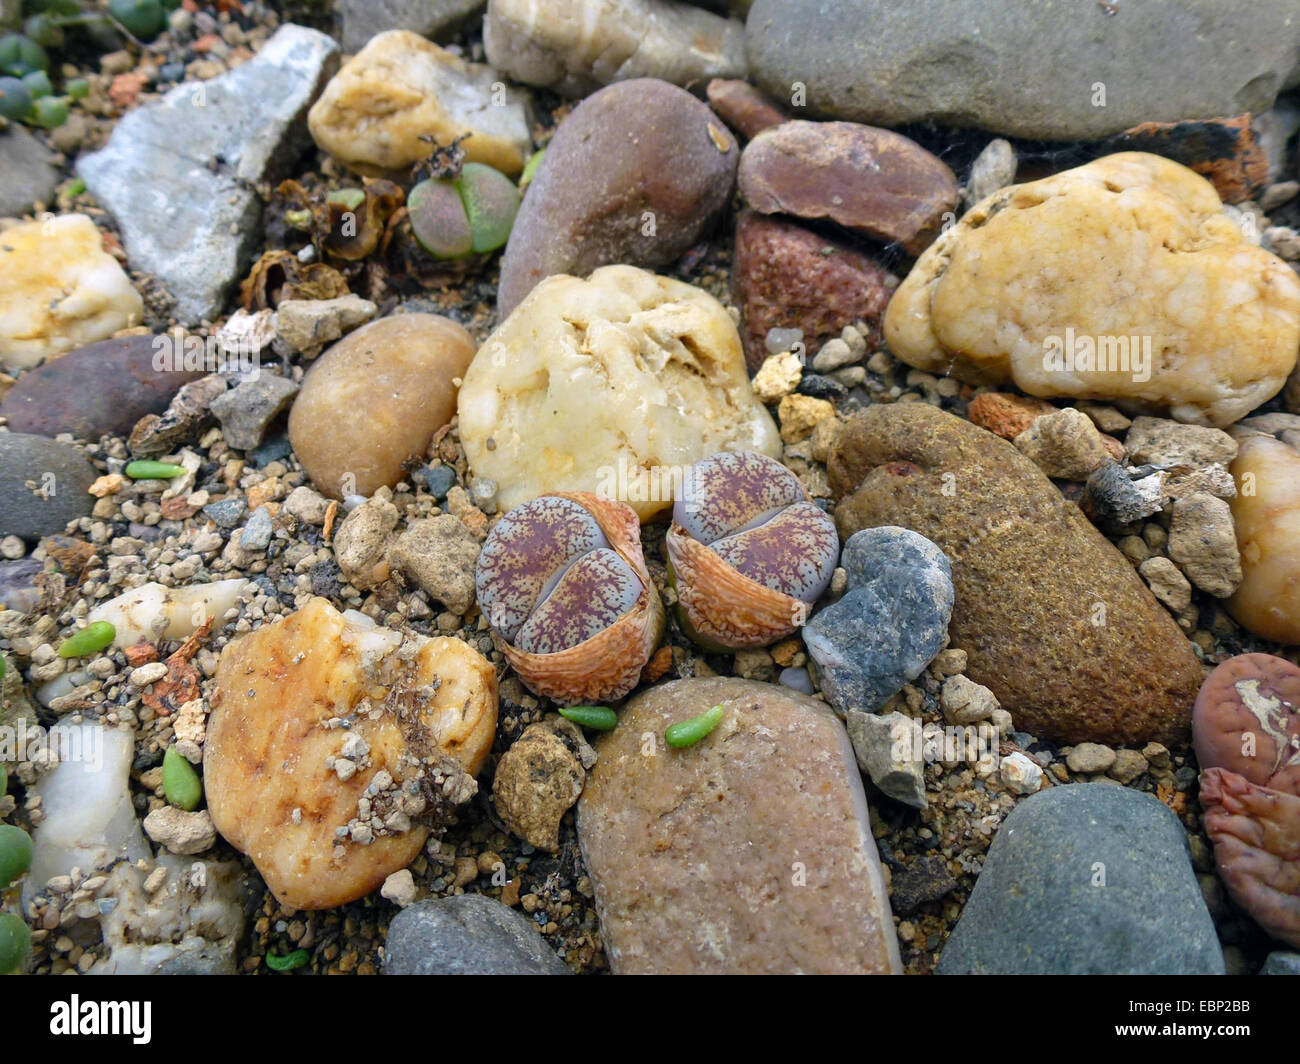 stone plant (Lithops spec.), living stones among real stones Stock Photo